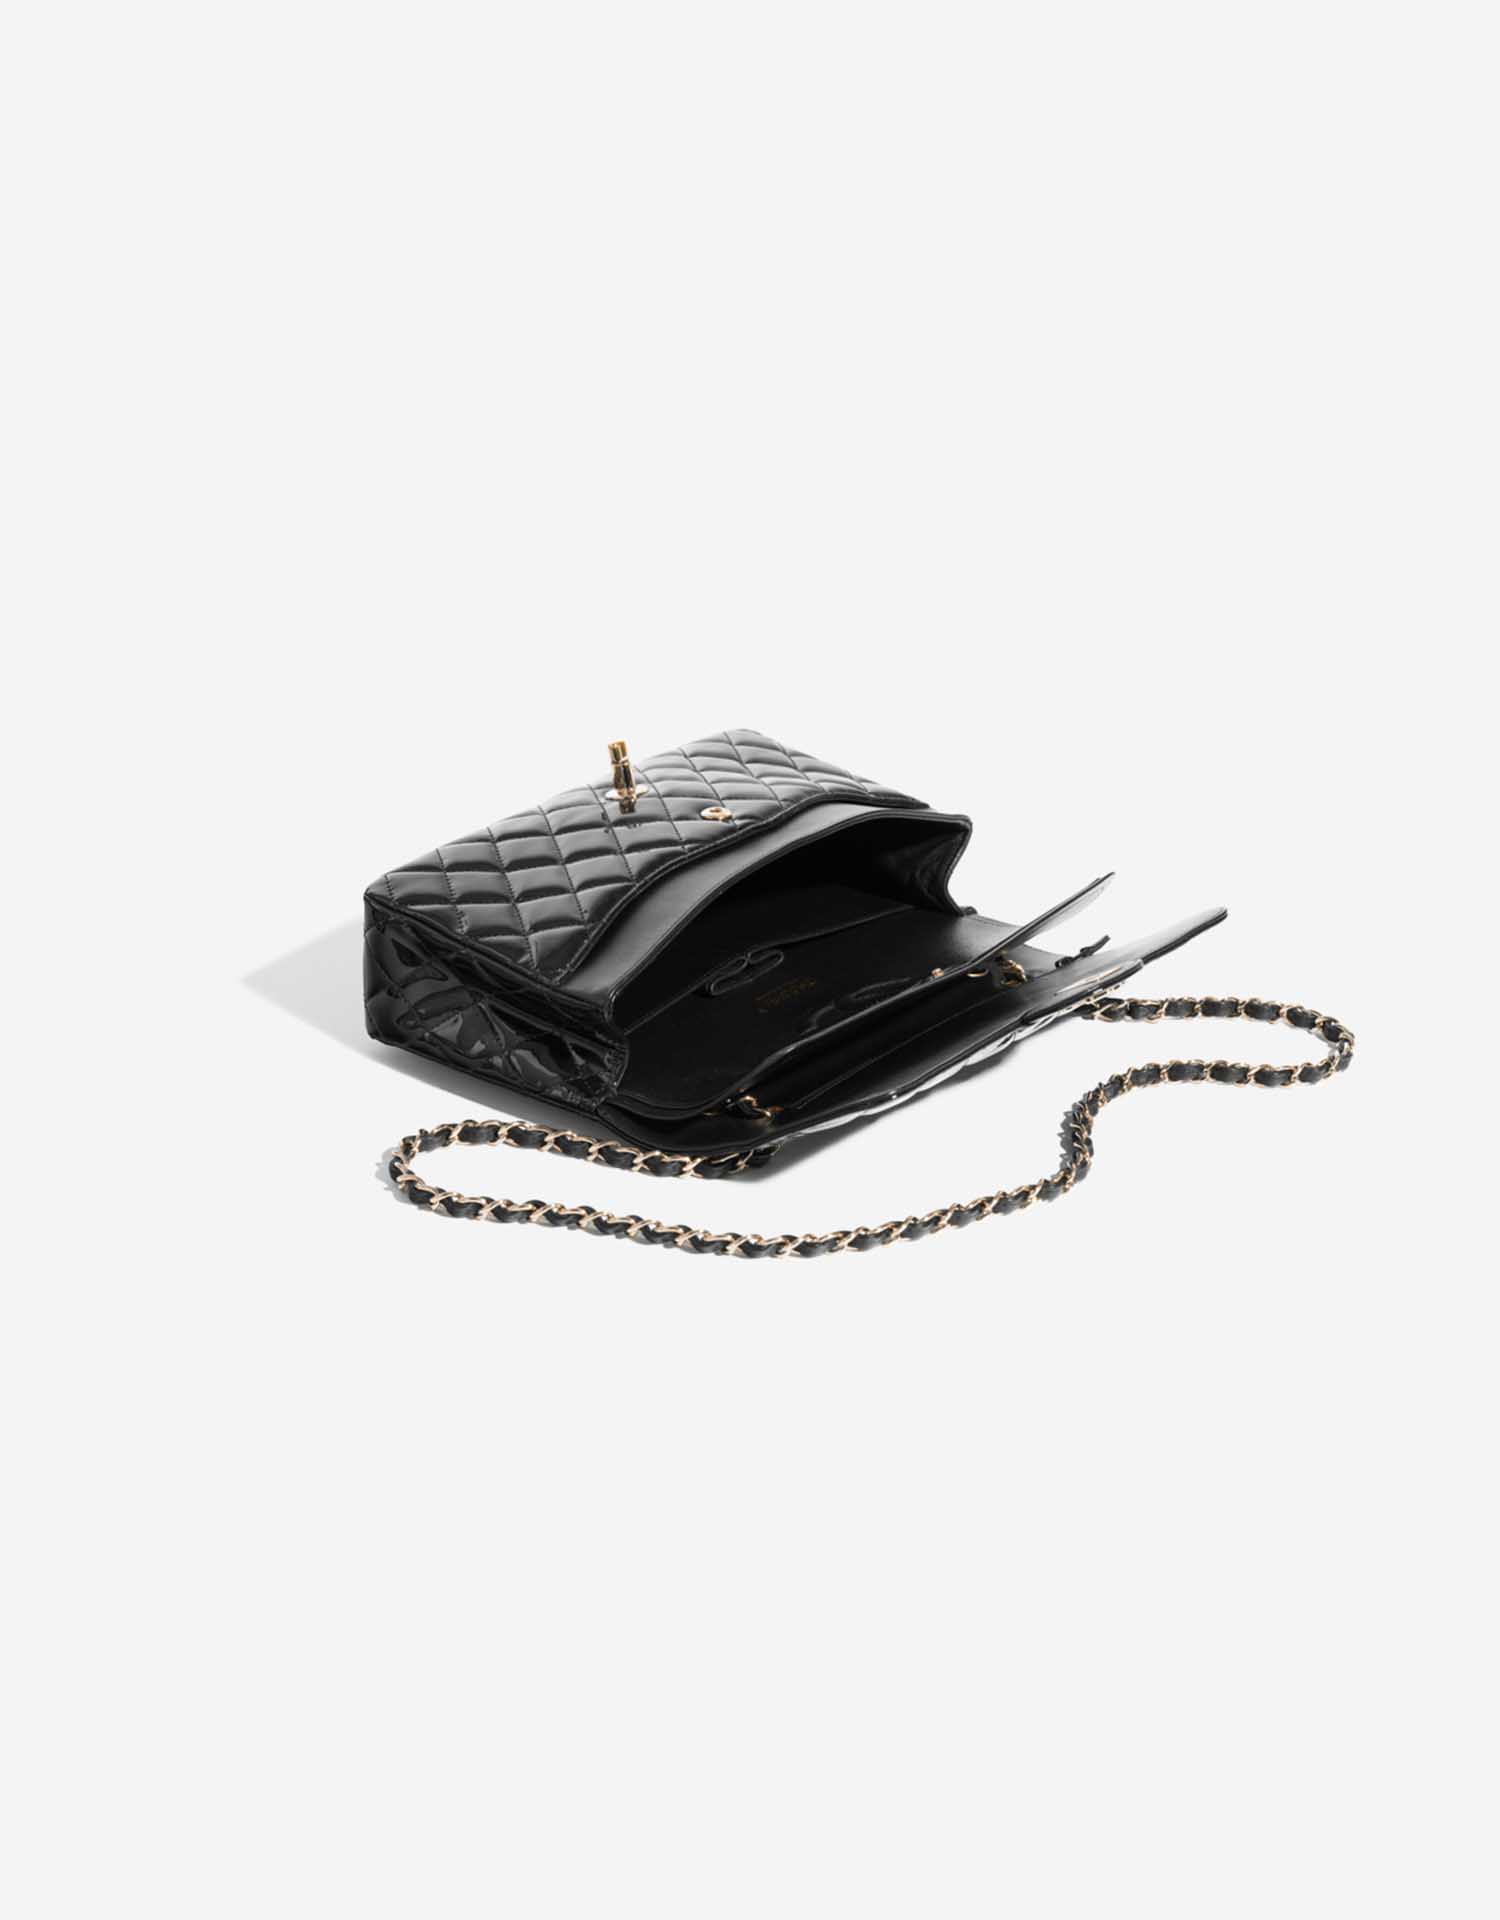 Pre-owned Chanel bag Timeless Medium Patent Leather Black Black Inside | Sell your designer bag on Saclab.com